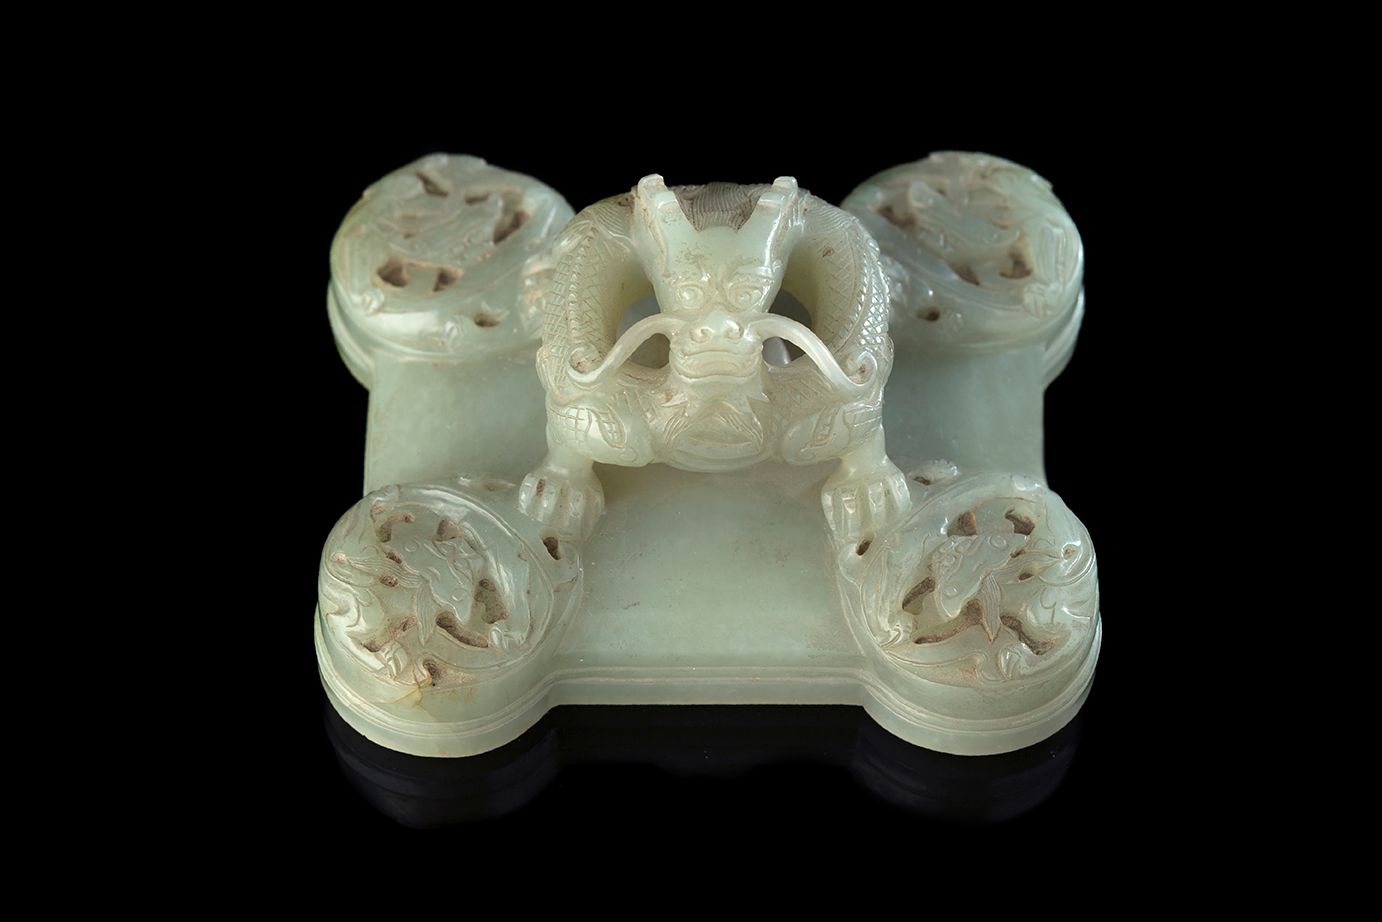 CHINE DYNASTIE QING, XVIIIe-XIXe SIÈCLE Rare tulu incense burner cover
In celado&hellip;